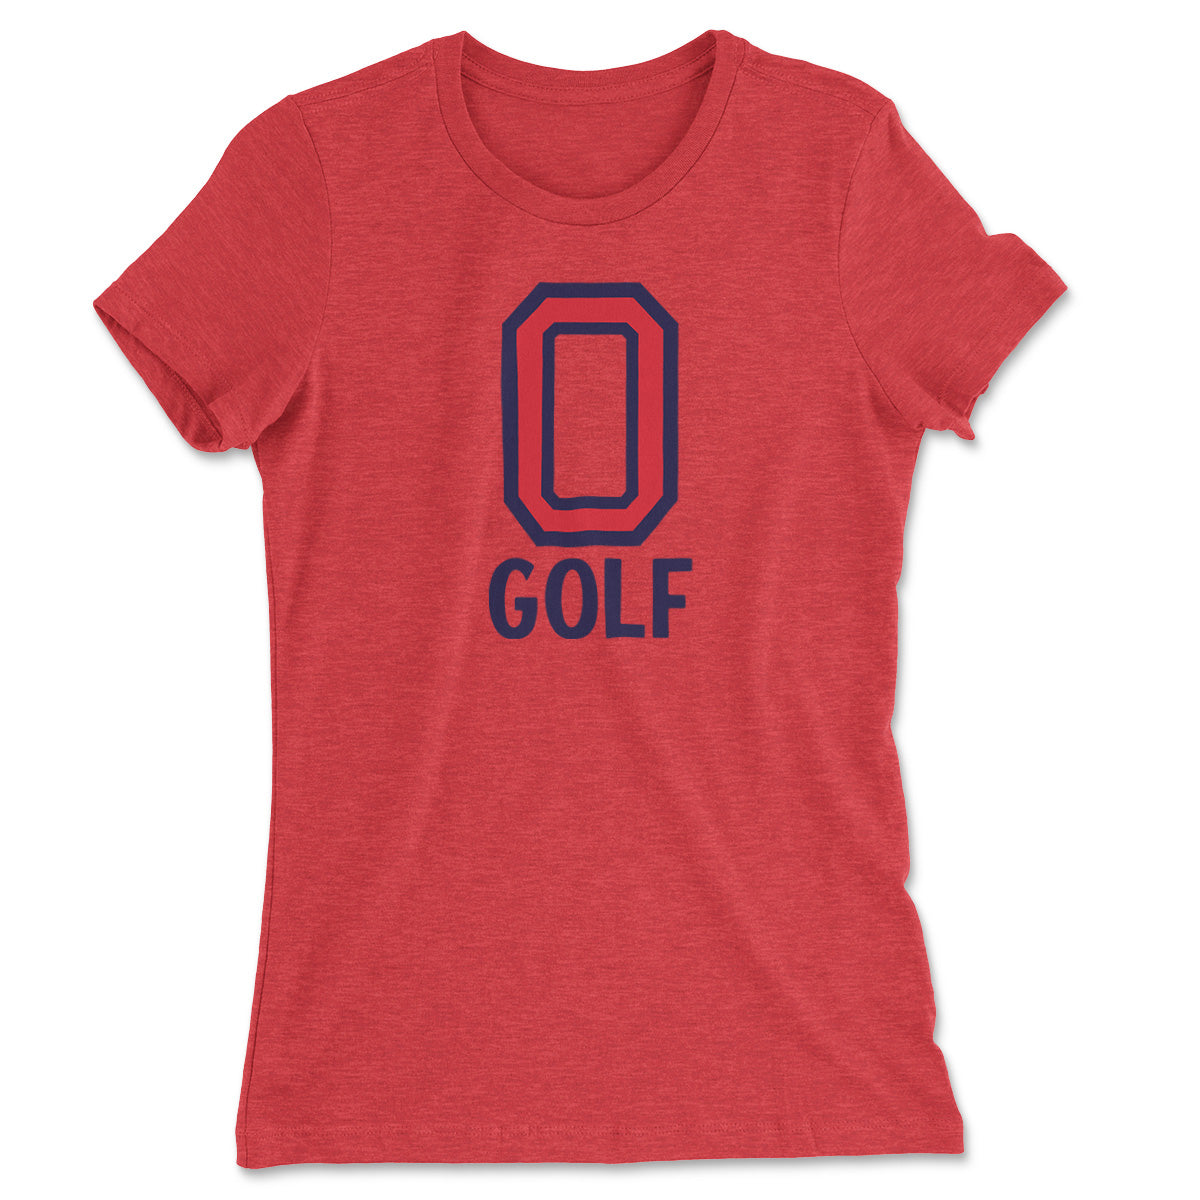 Orono Golf // Women's Tee